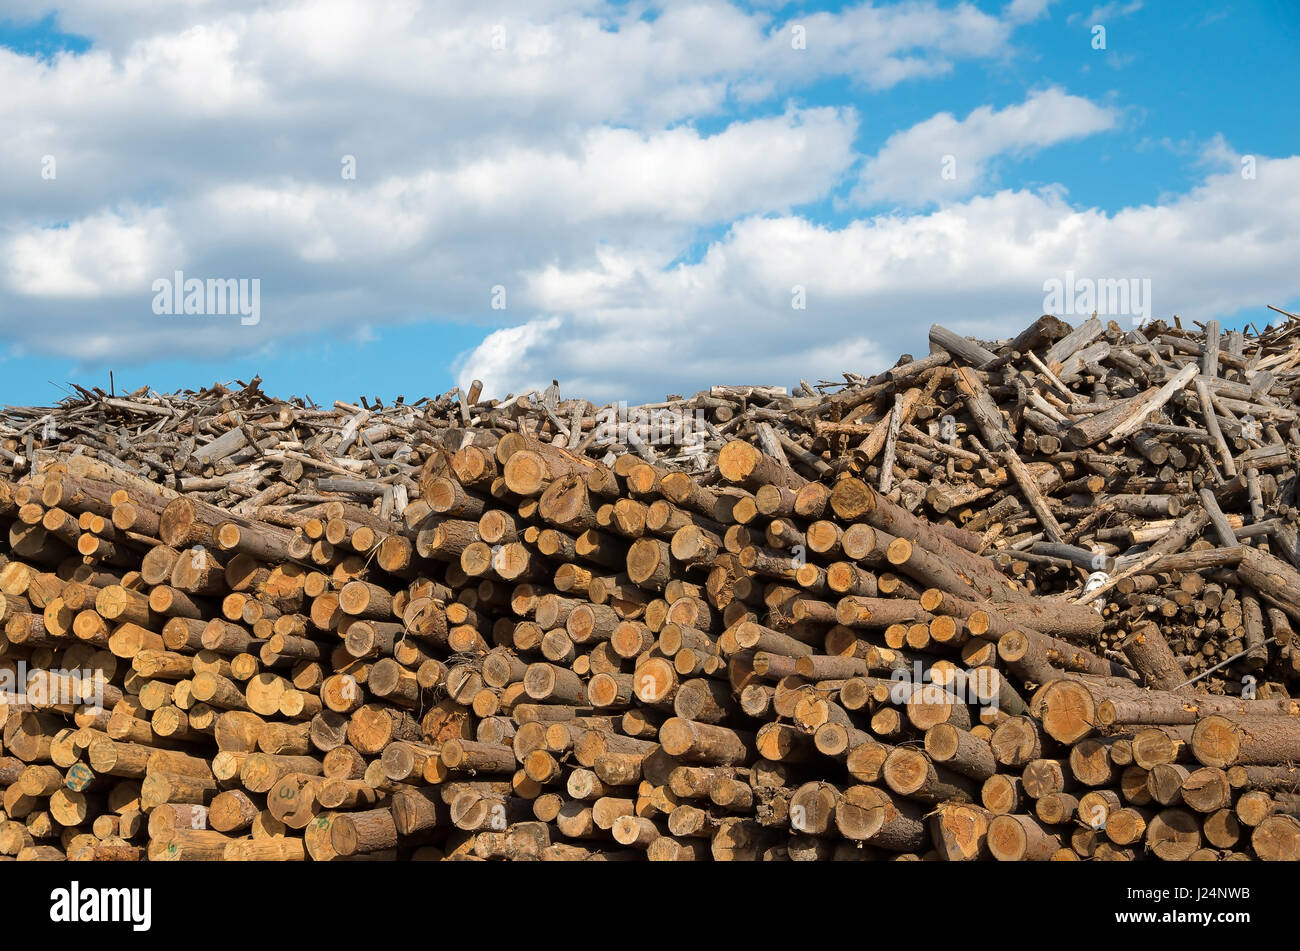 Logging. Industry destructive nature. Stock Photo